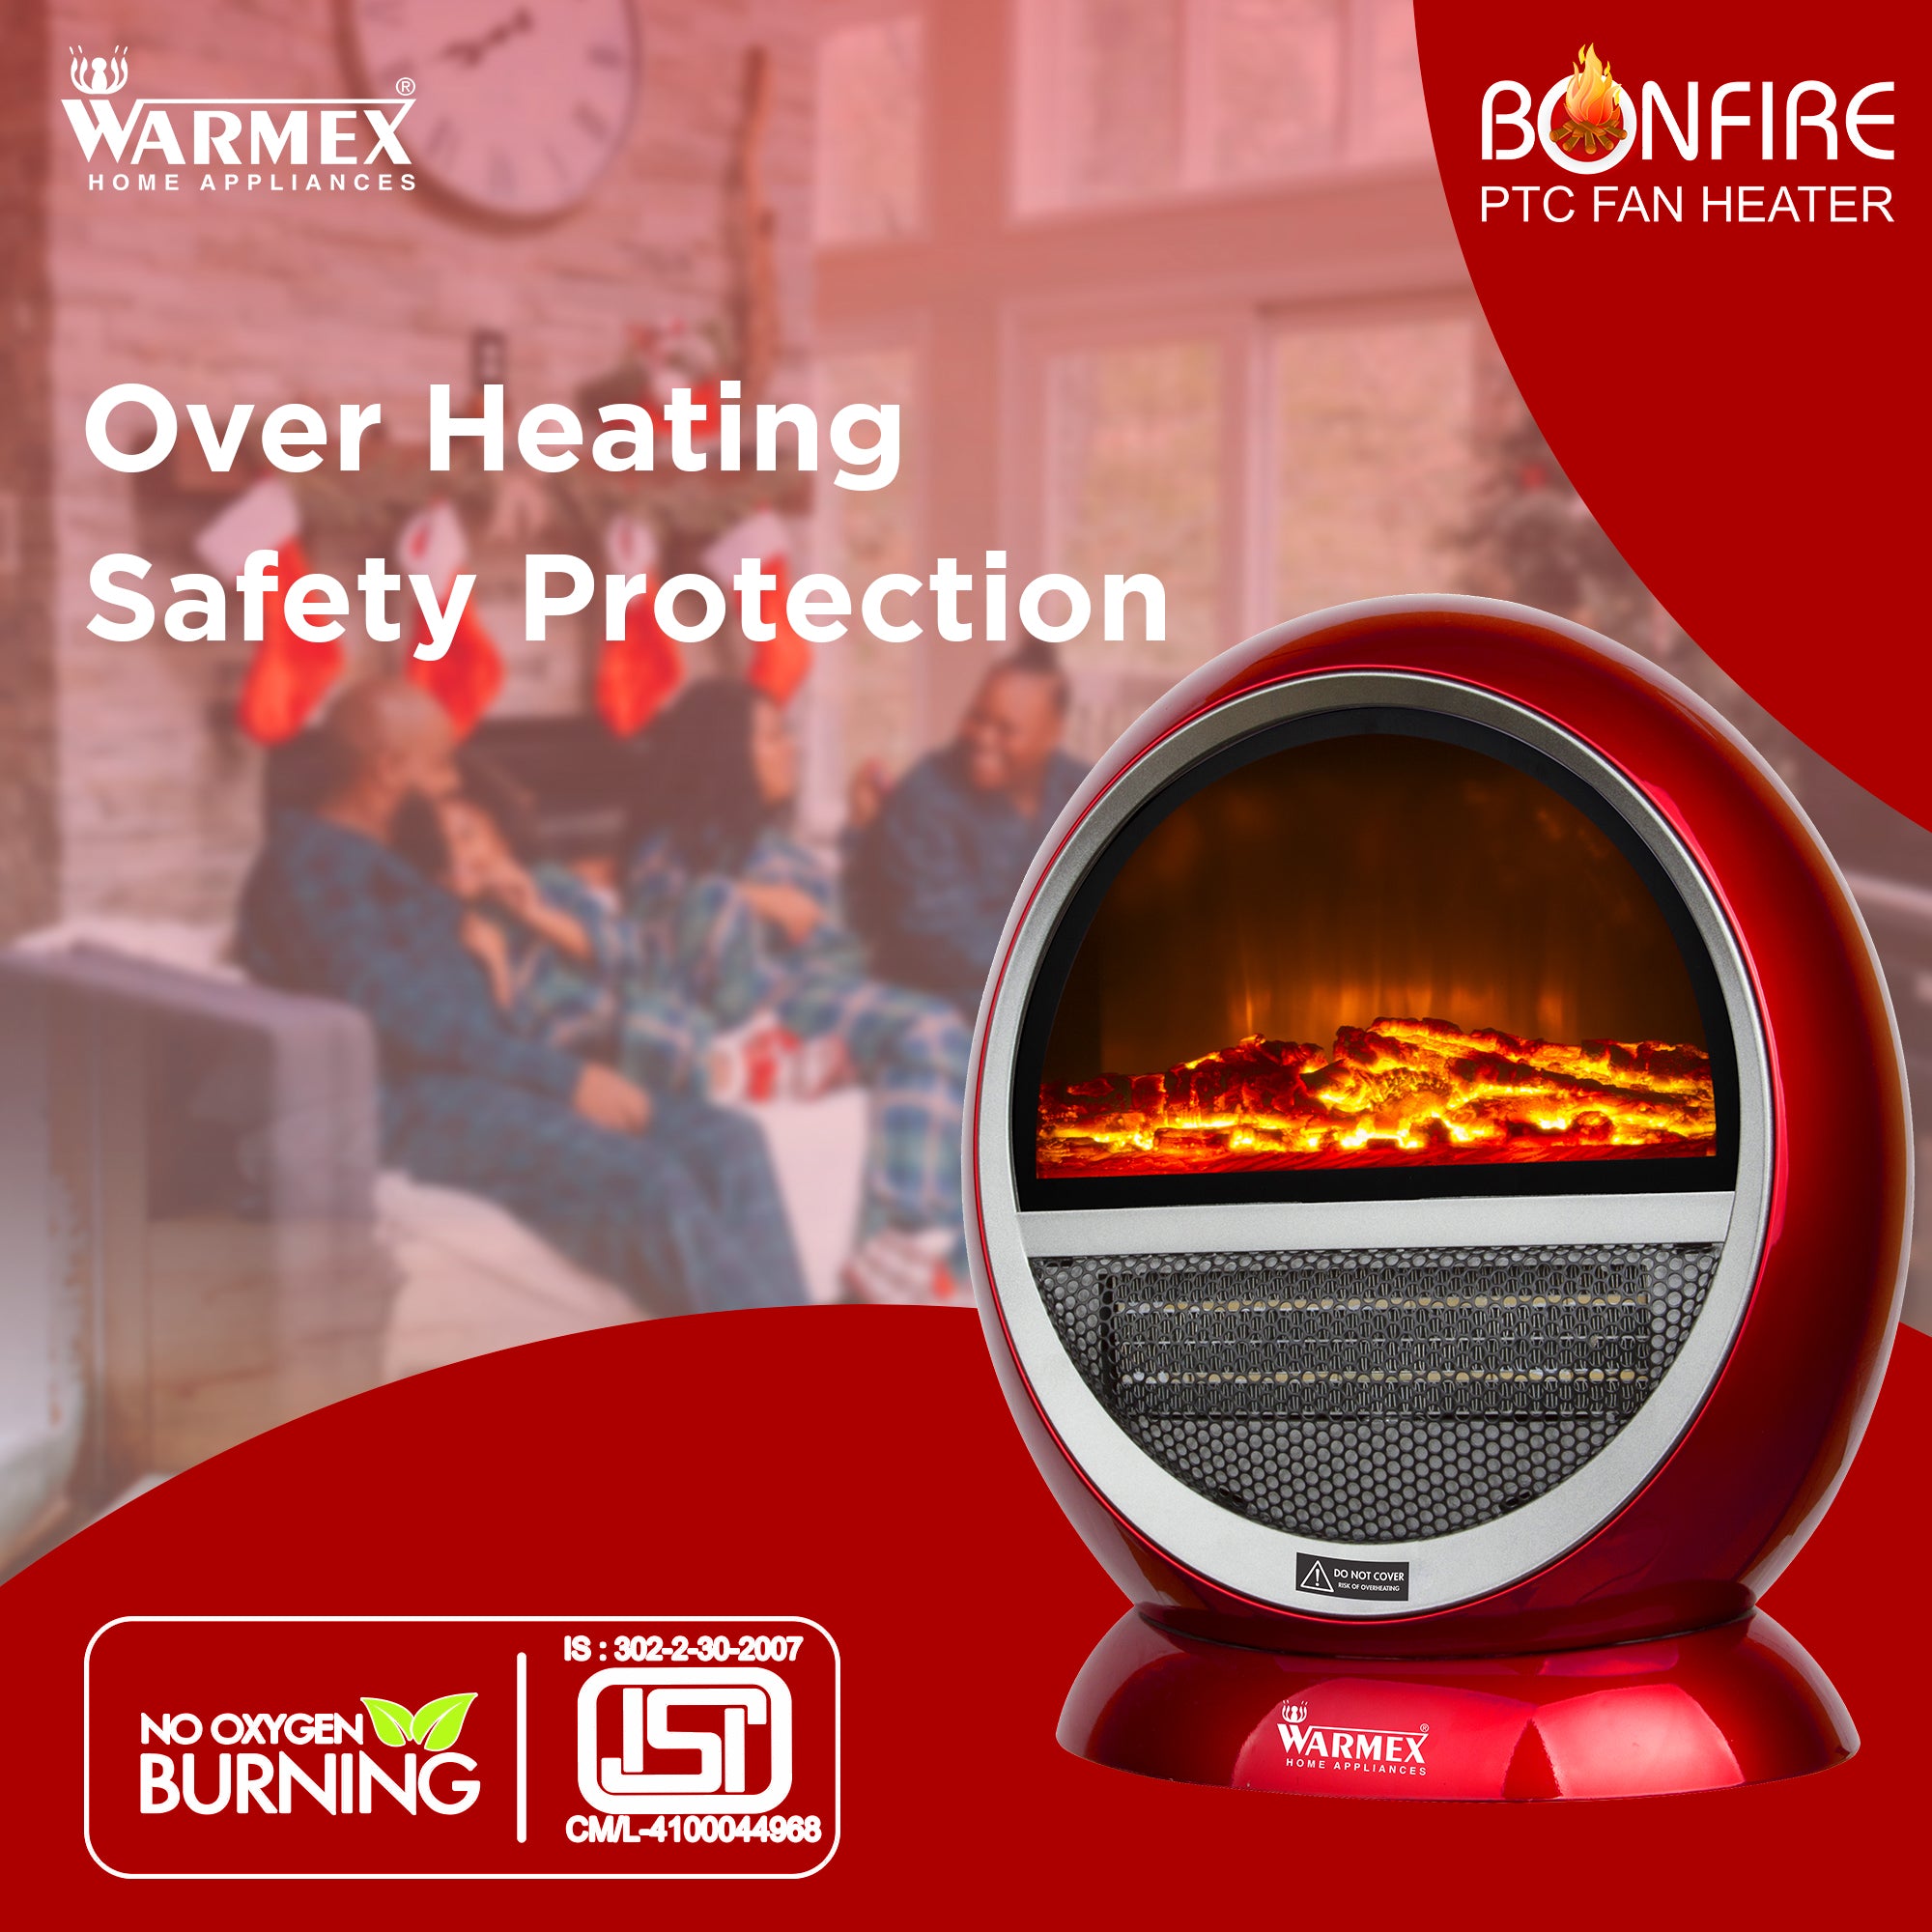 Warmex 750/1500 Watts Room Heater BONFIRE (RED & SILVER)